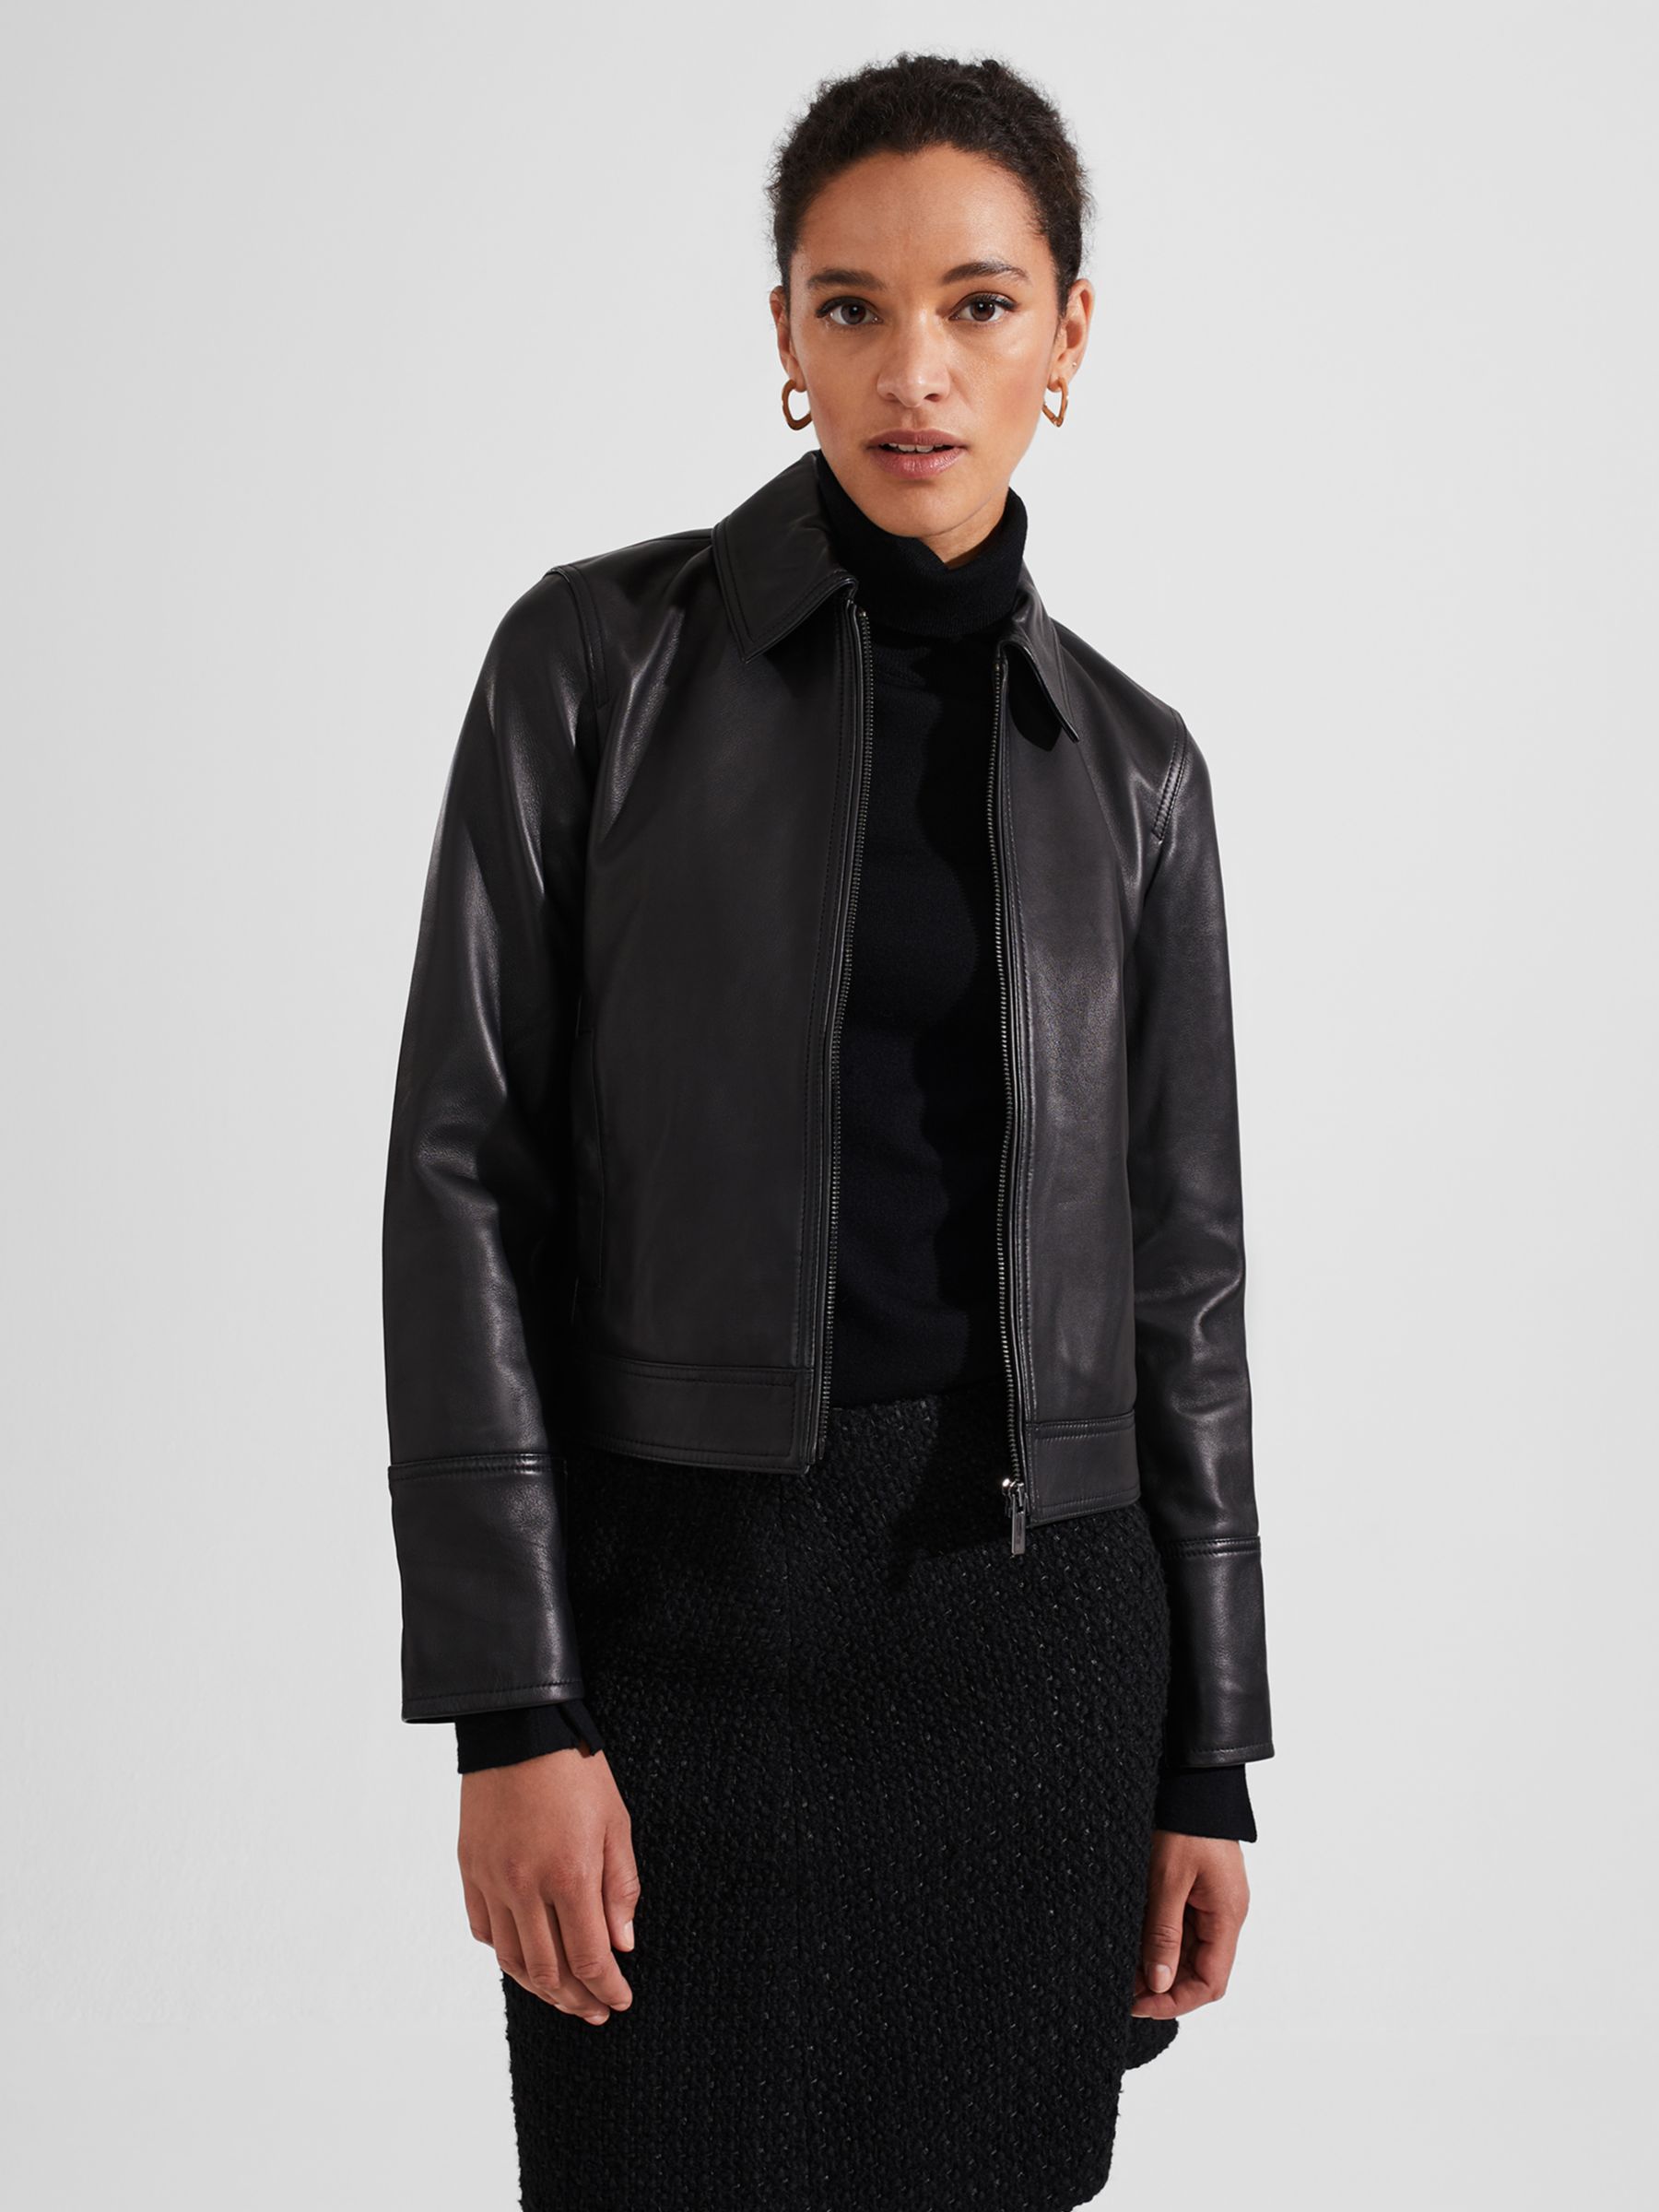 Hobbs Frederica Short Leather Jacket, Black at John Lewis & Partners